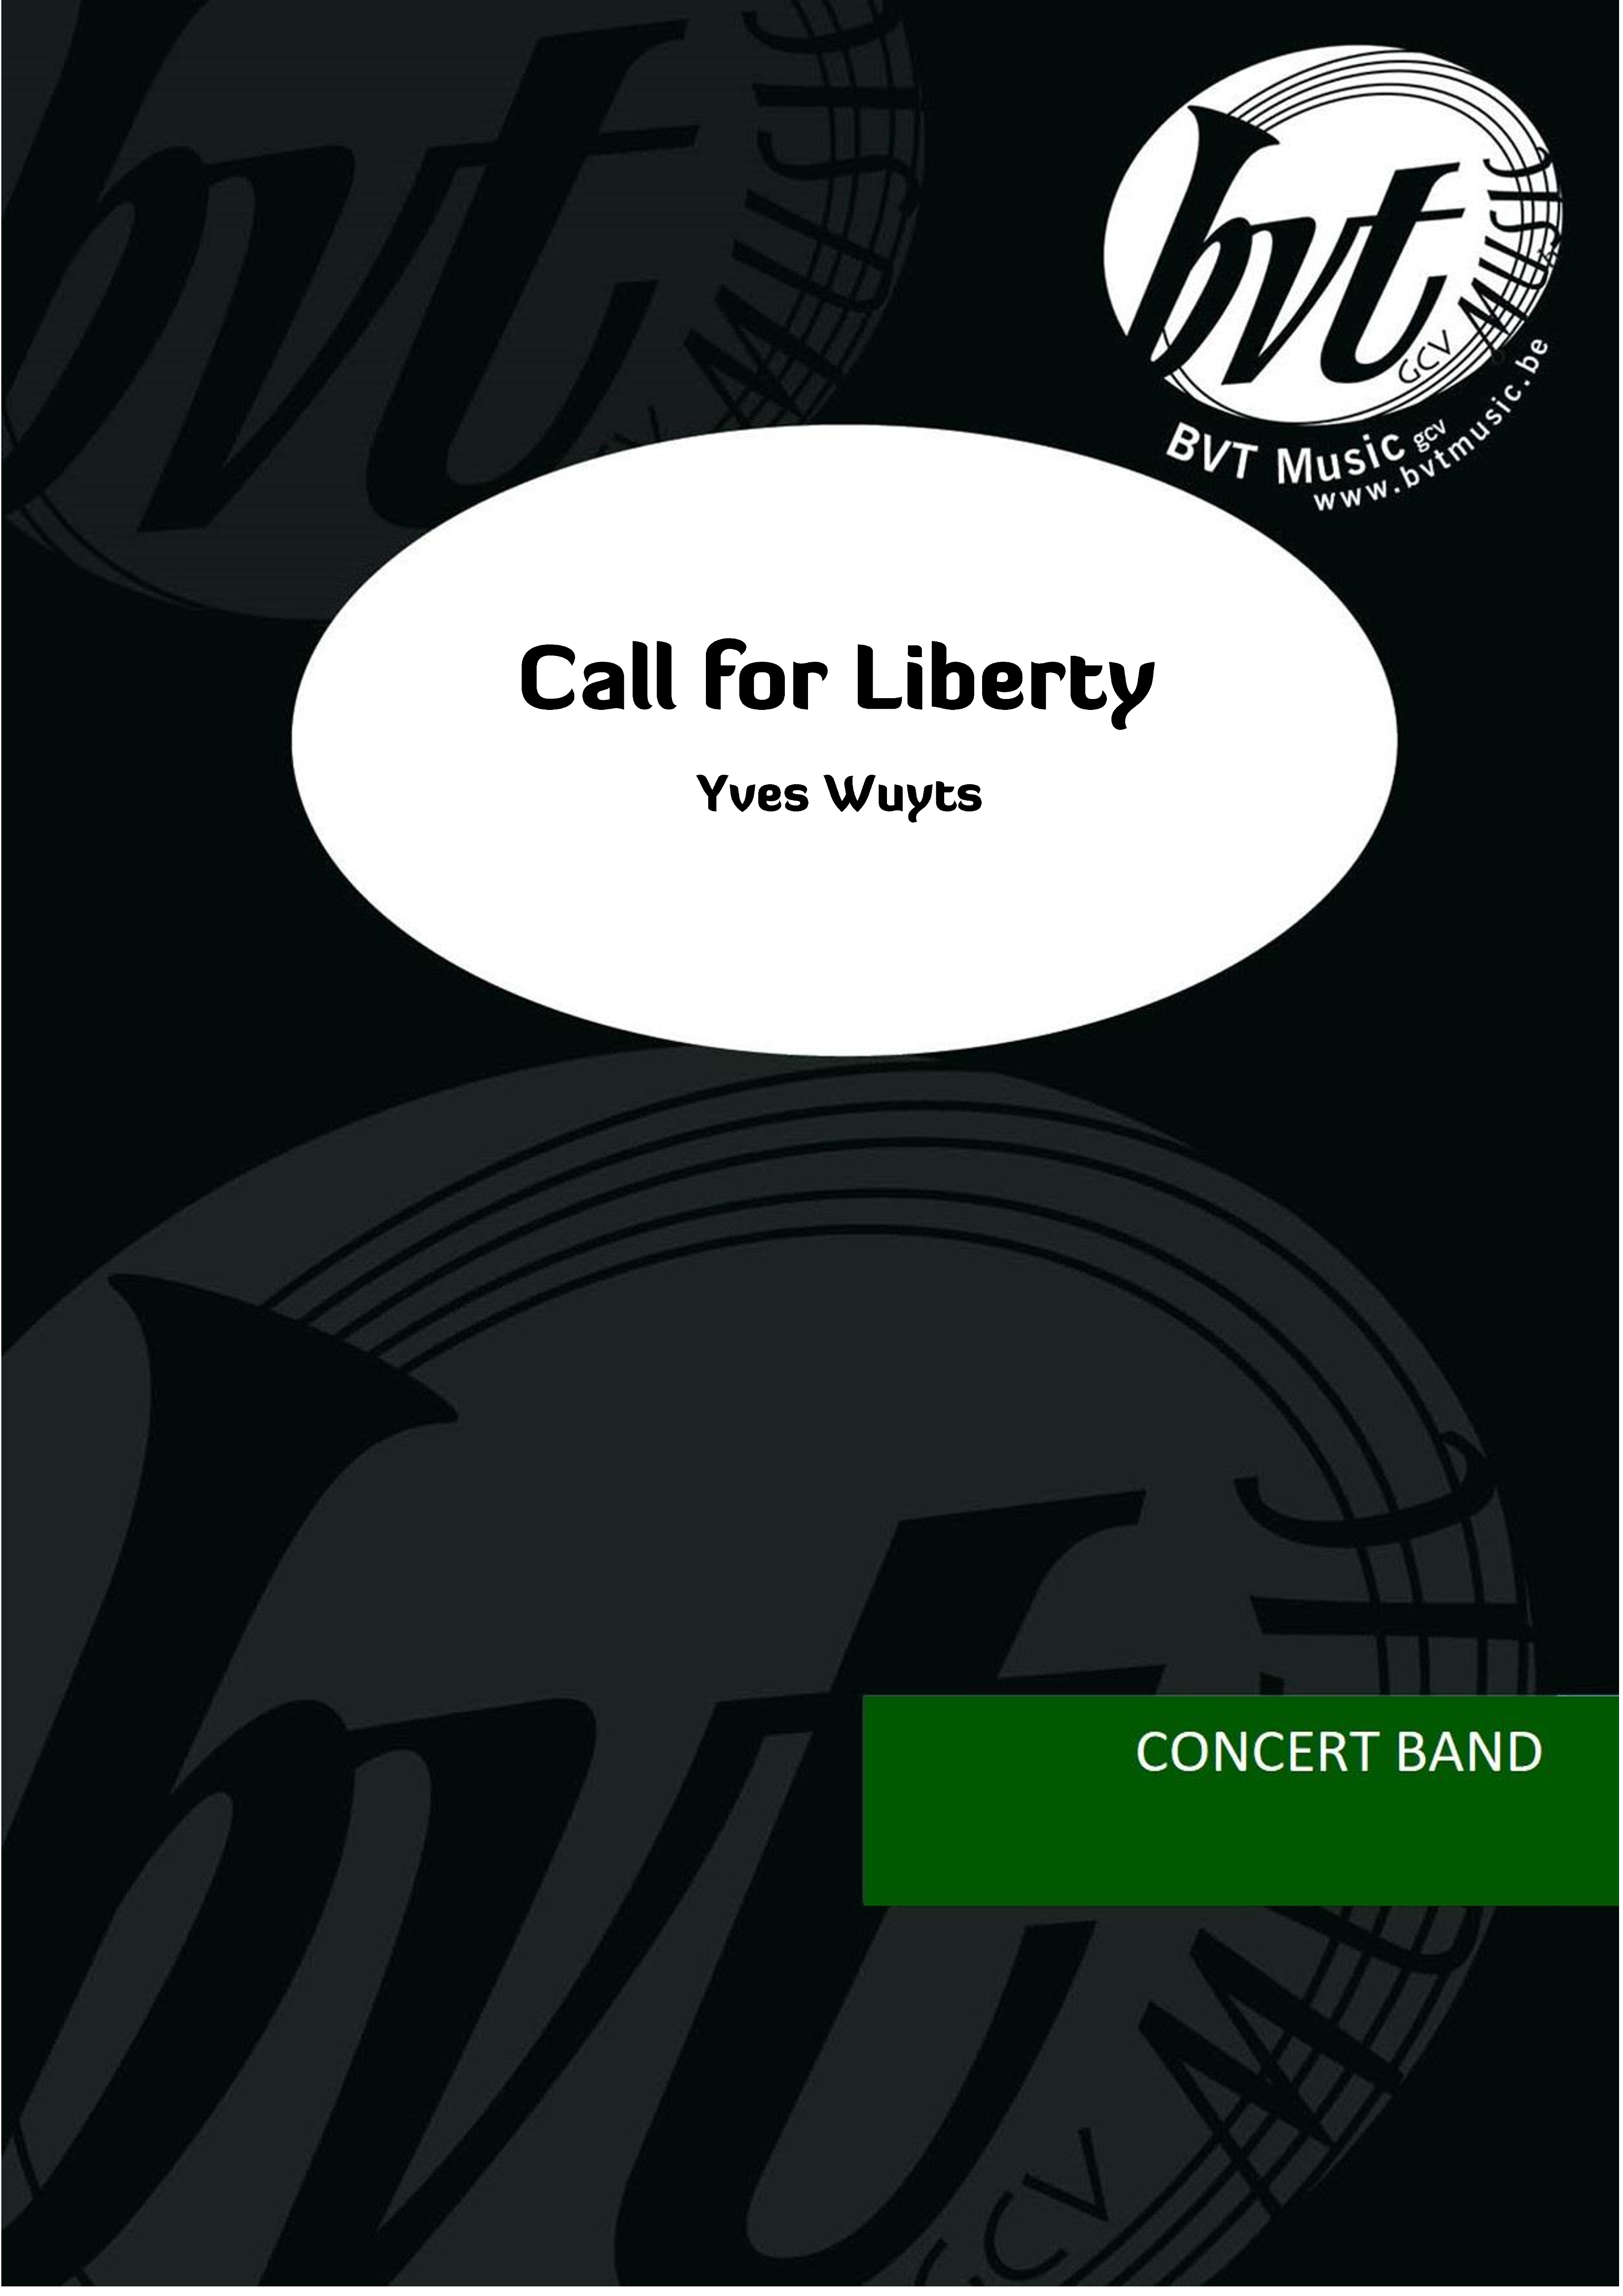 Call for Liberty (CB)